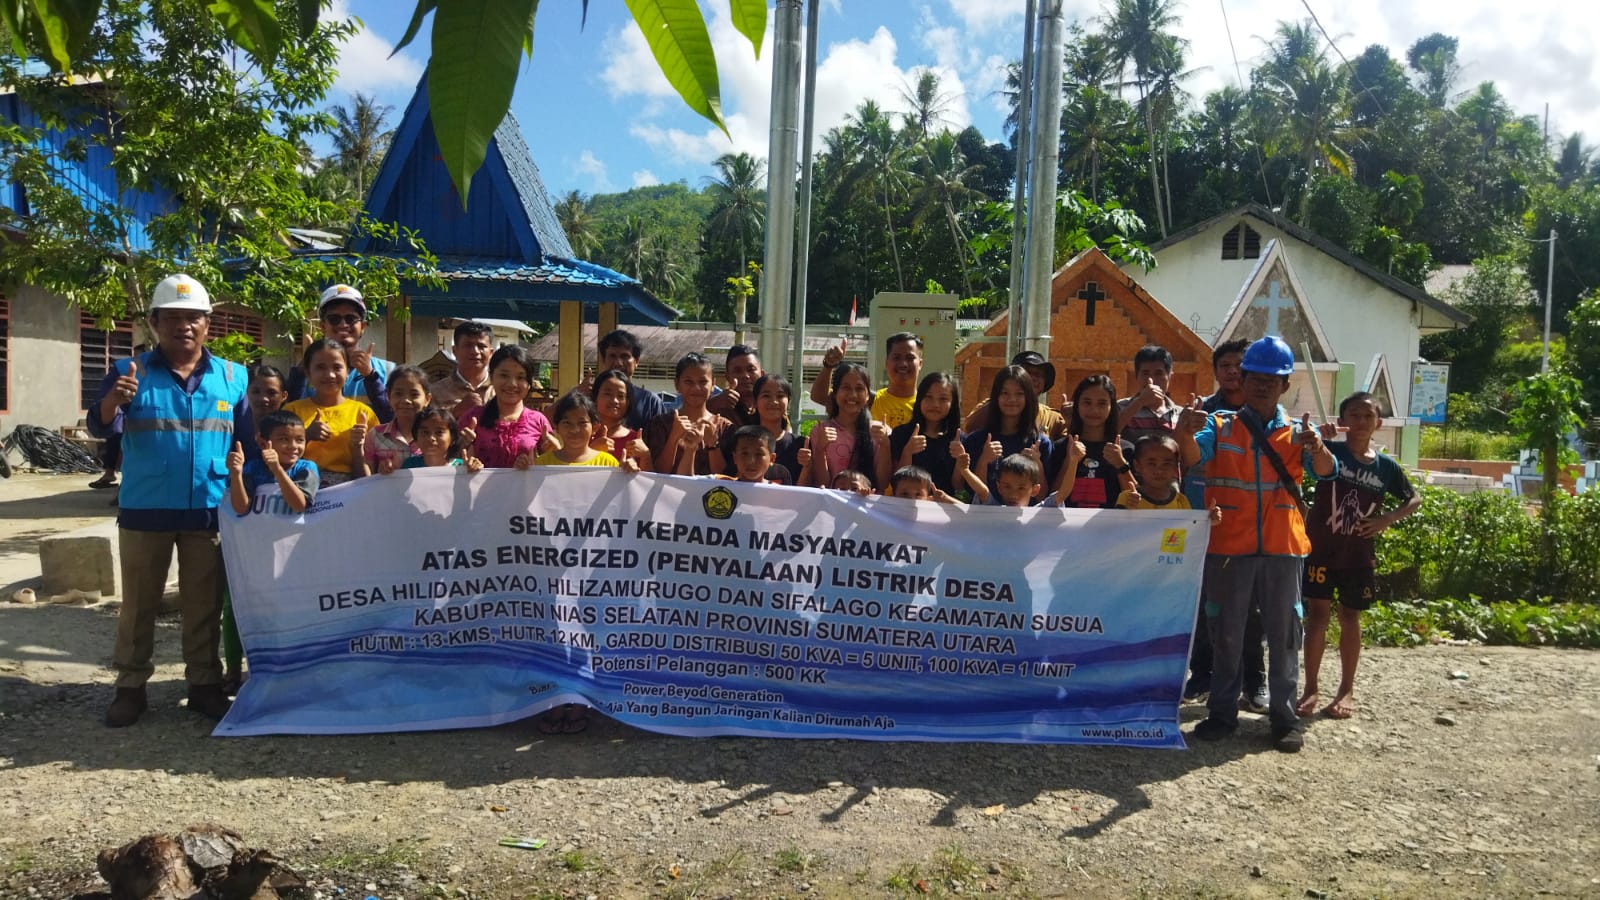 Masyarakat desa terpencil di Kecamatan Susua, Kabupaten Nias, foto bersama pihak PLN pada pelaksanaan penyalaan listrik setelah mendapatkan penerangan listrik dari PLN Unit Induk Distribusi Sumatera Utara.